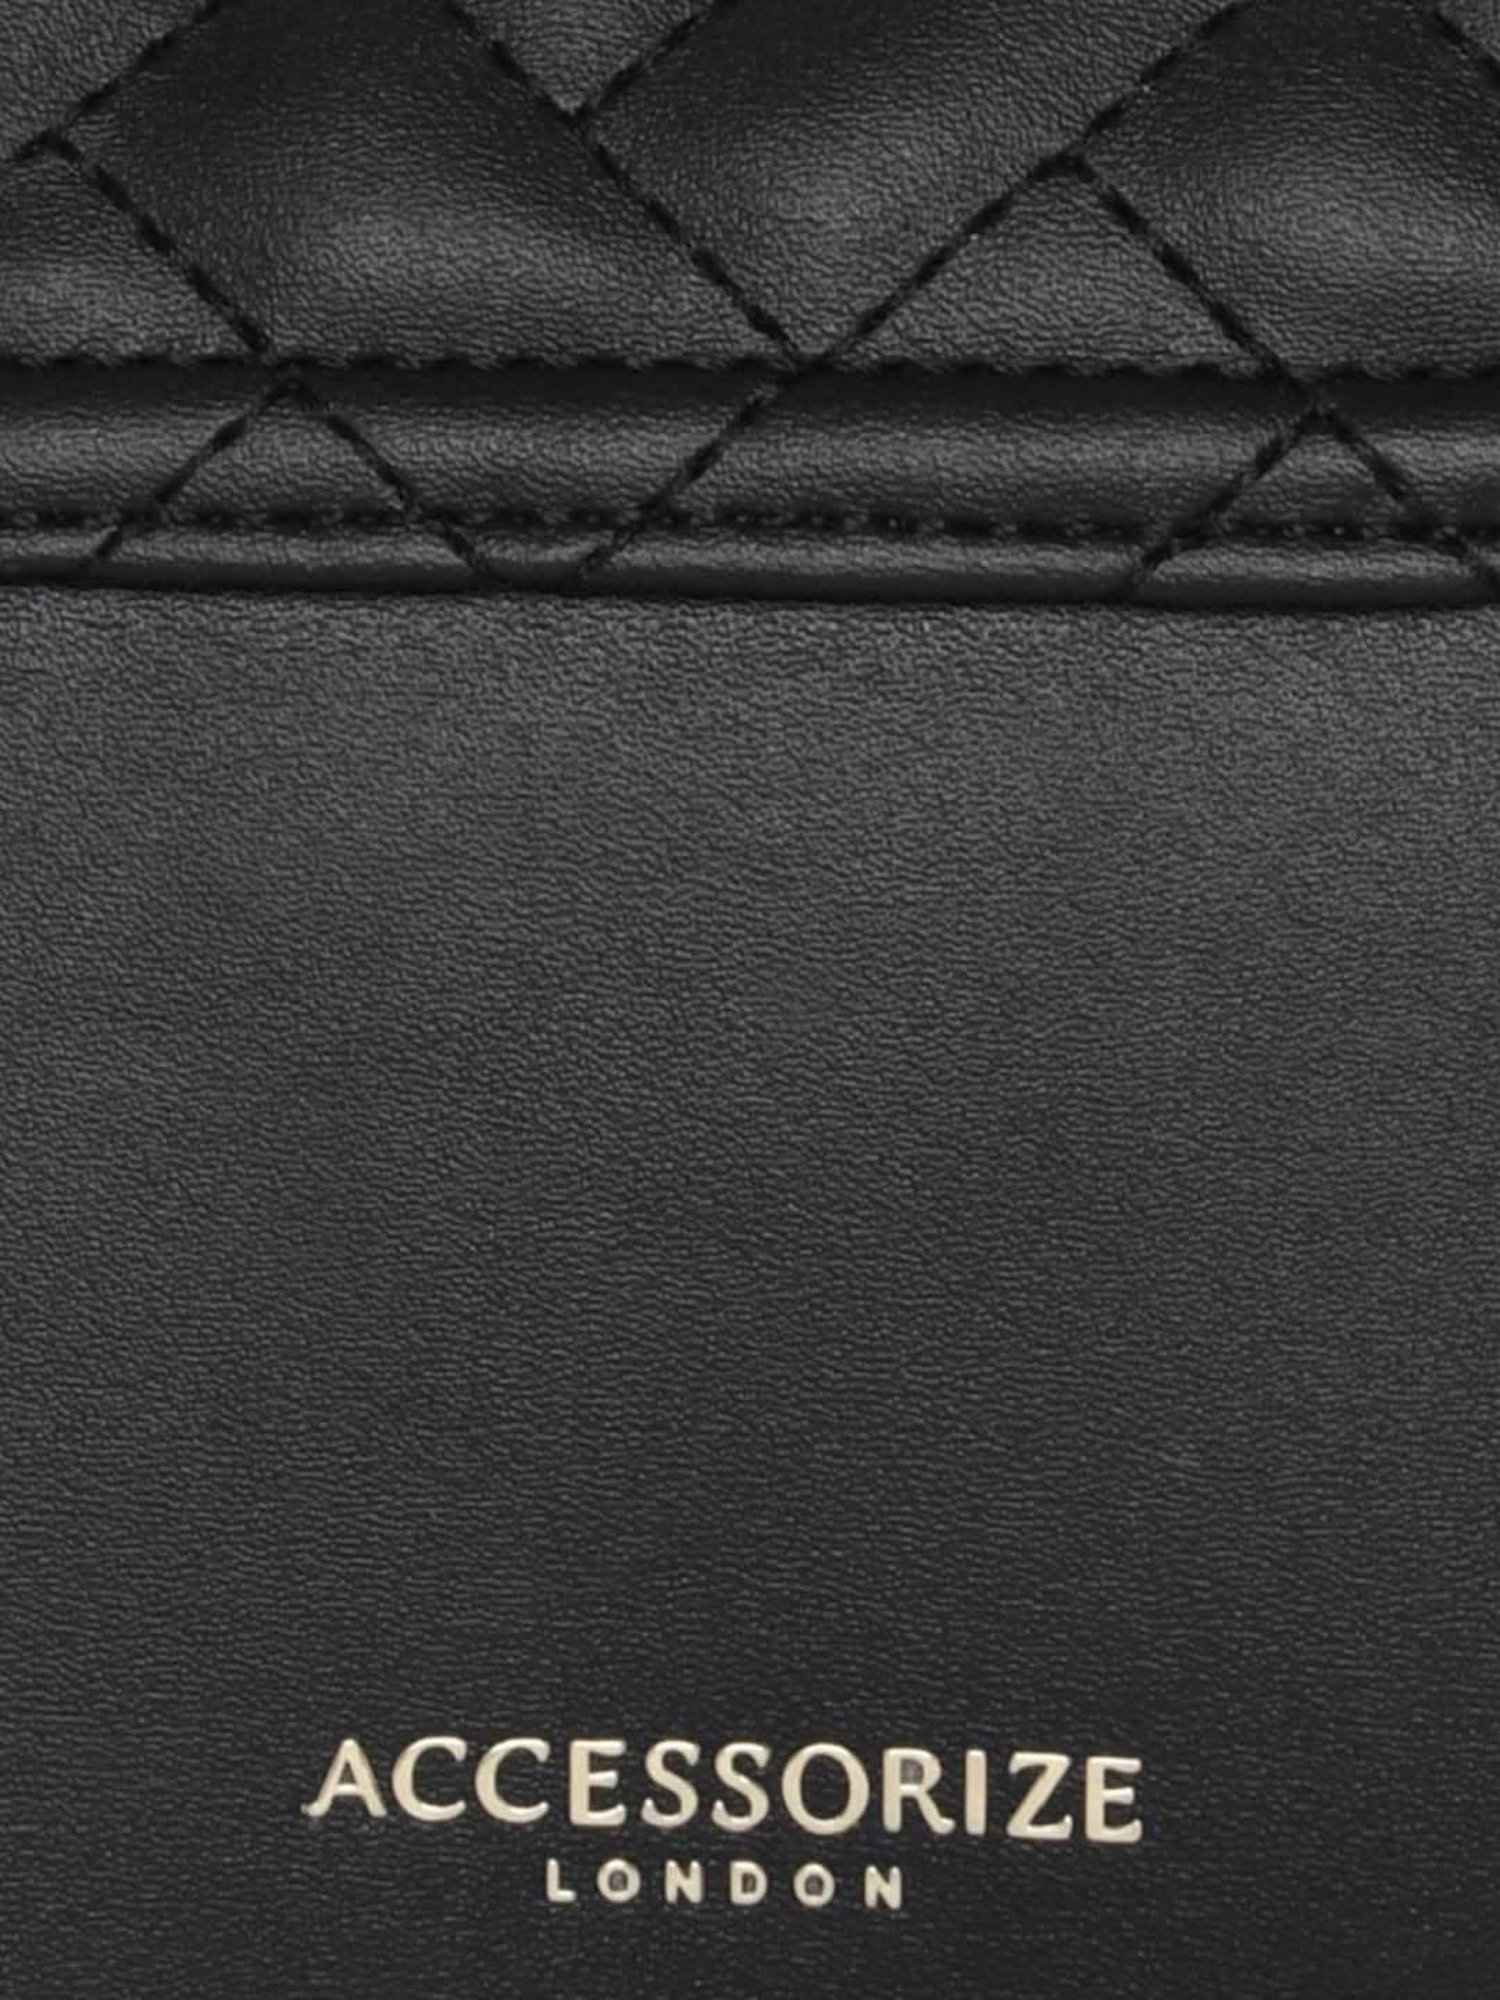 Accessorize London Women's Faux Leather Black Eva Quilt Shoulder Sling bag (Onesize) by Myntra